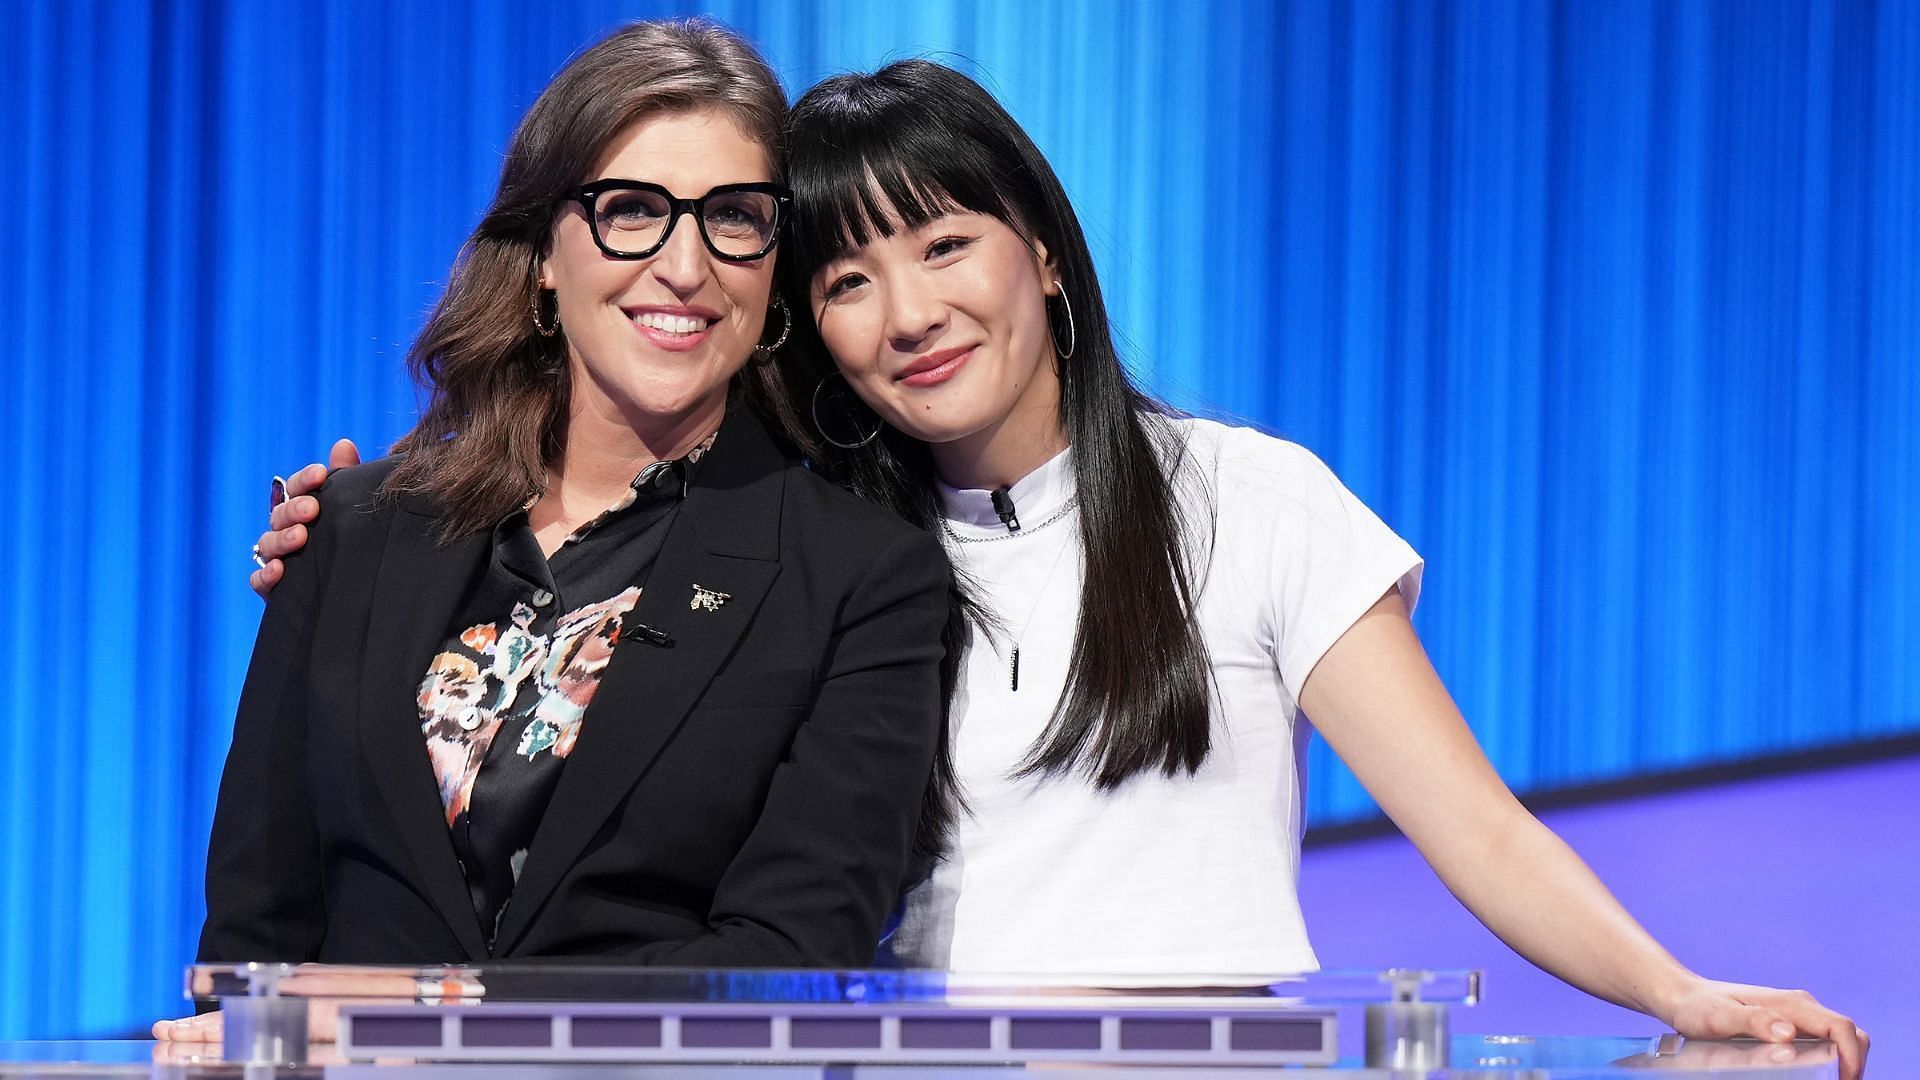 Constance Wu alongside others to appear on Celebrity Jeopardy!